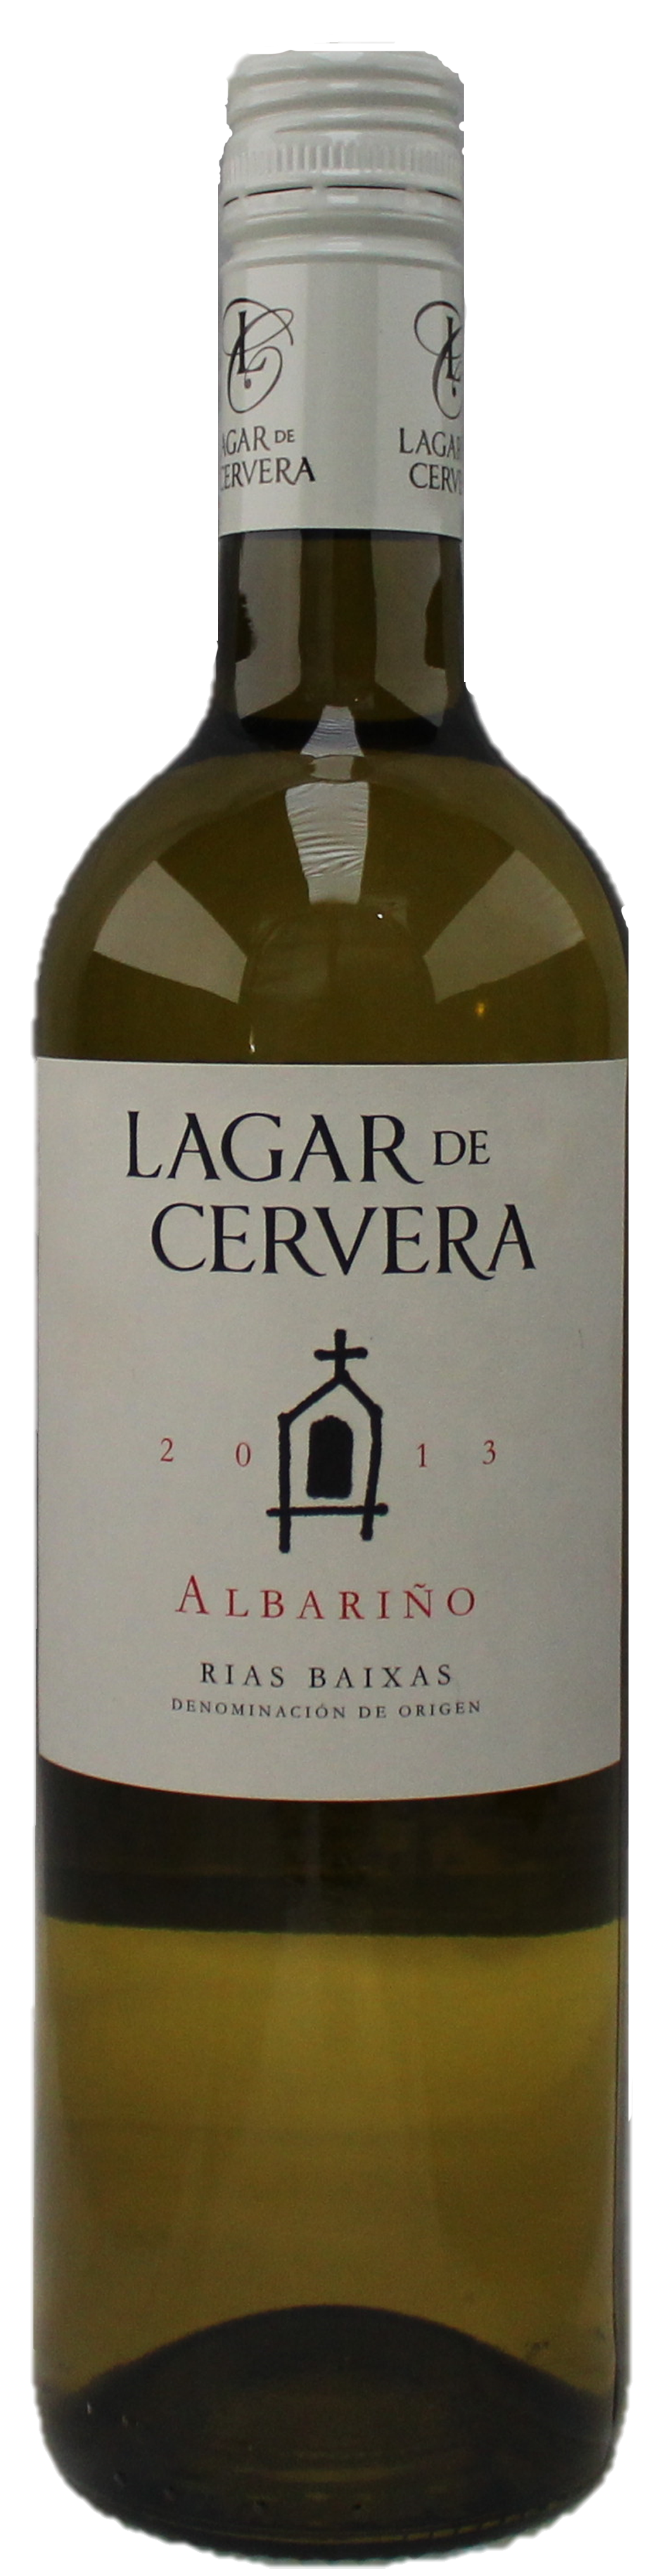 Bottle shot of 2013 Albariño